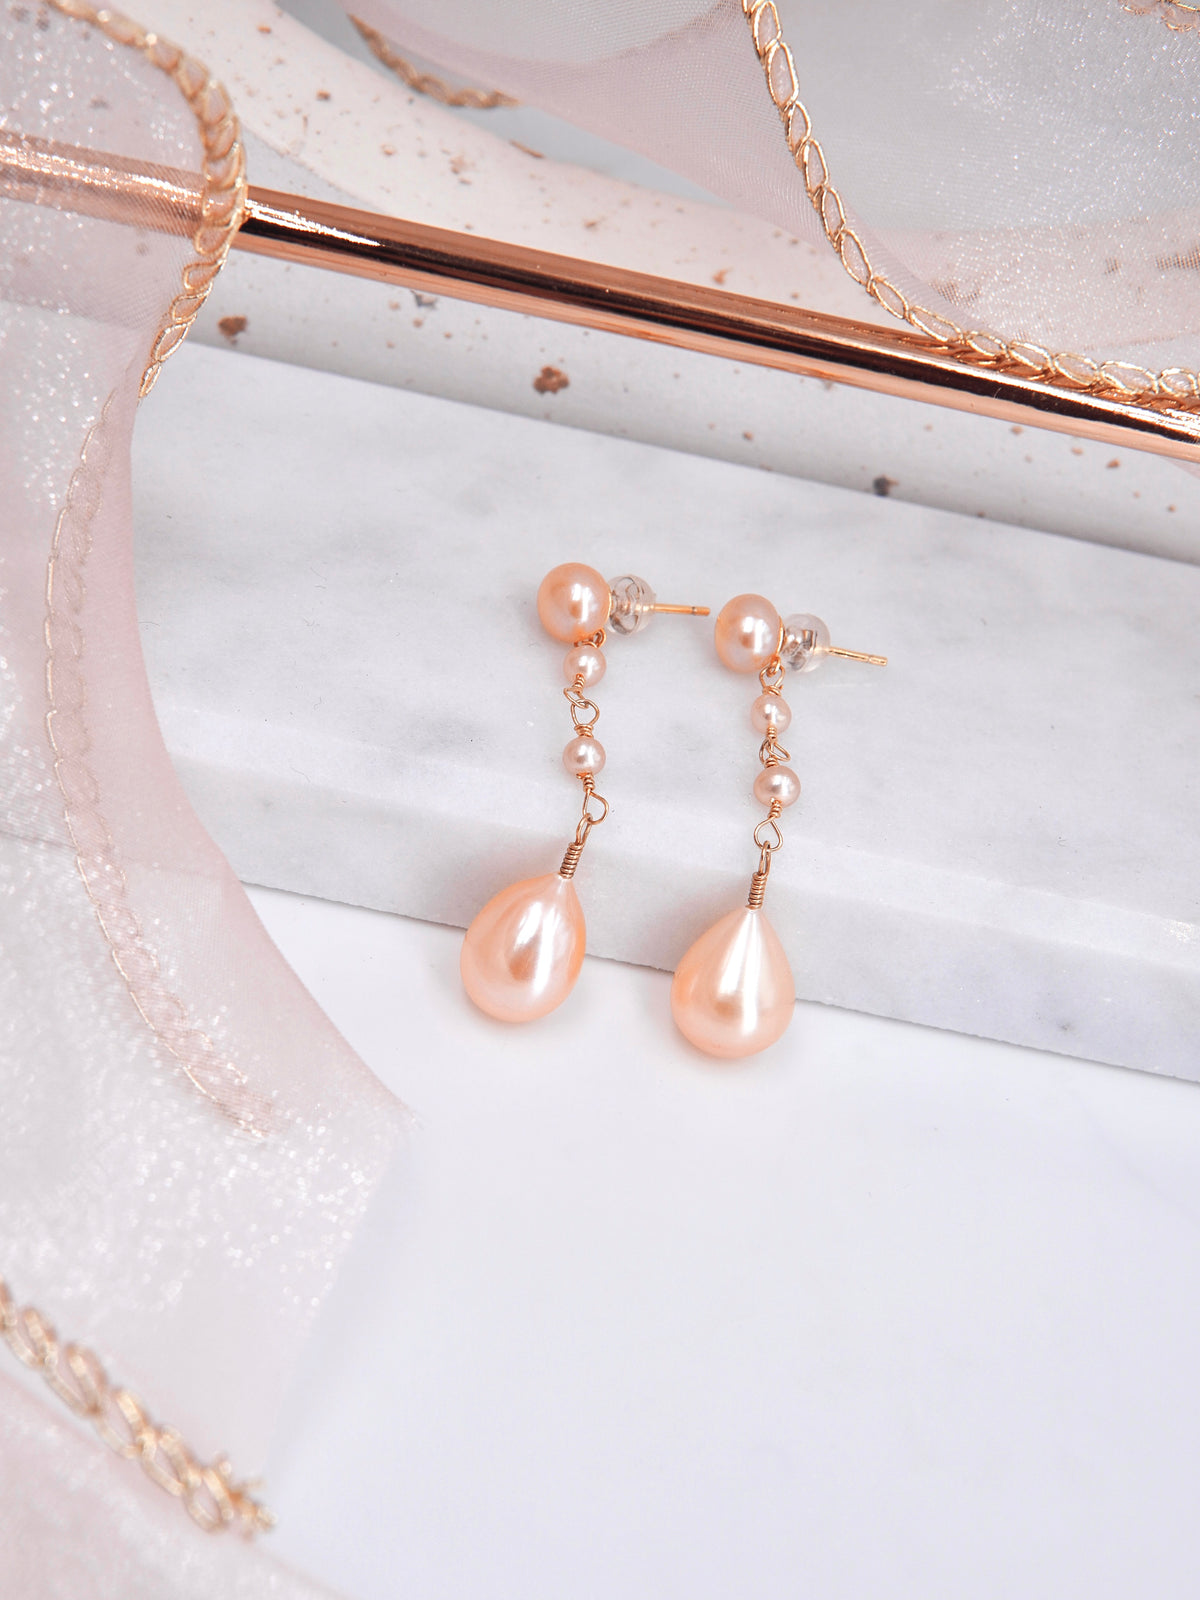 LAFIT· Ruddy Blush - Earrings 蜜桃粉嫩少女感珍珠耳環